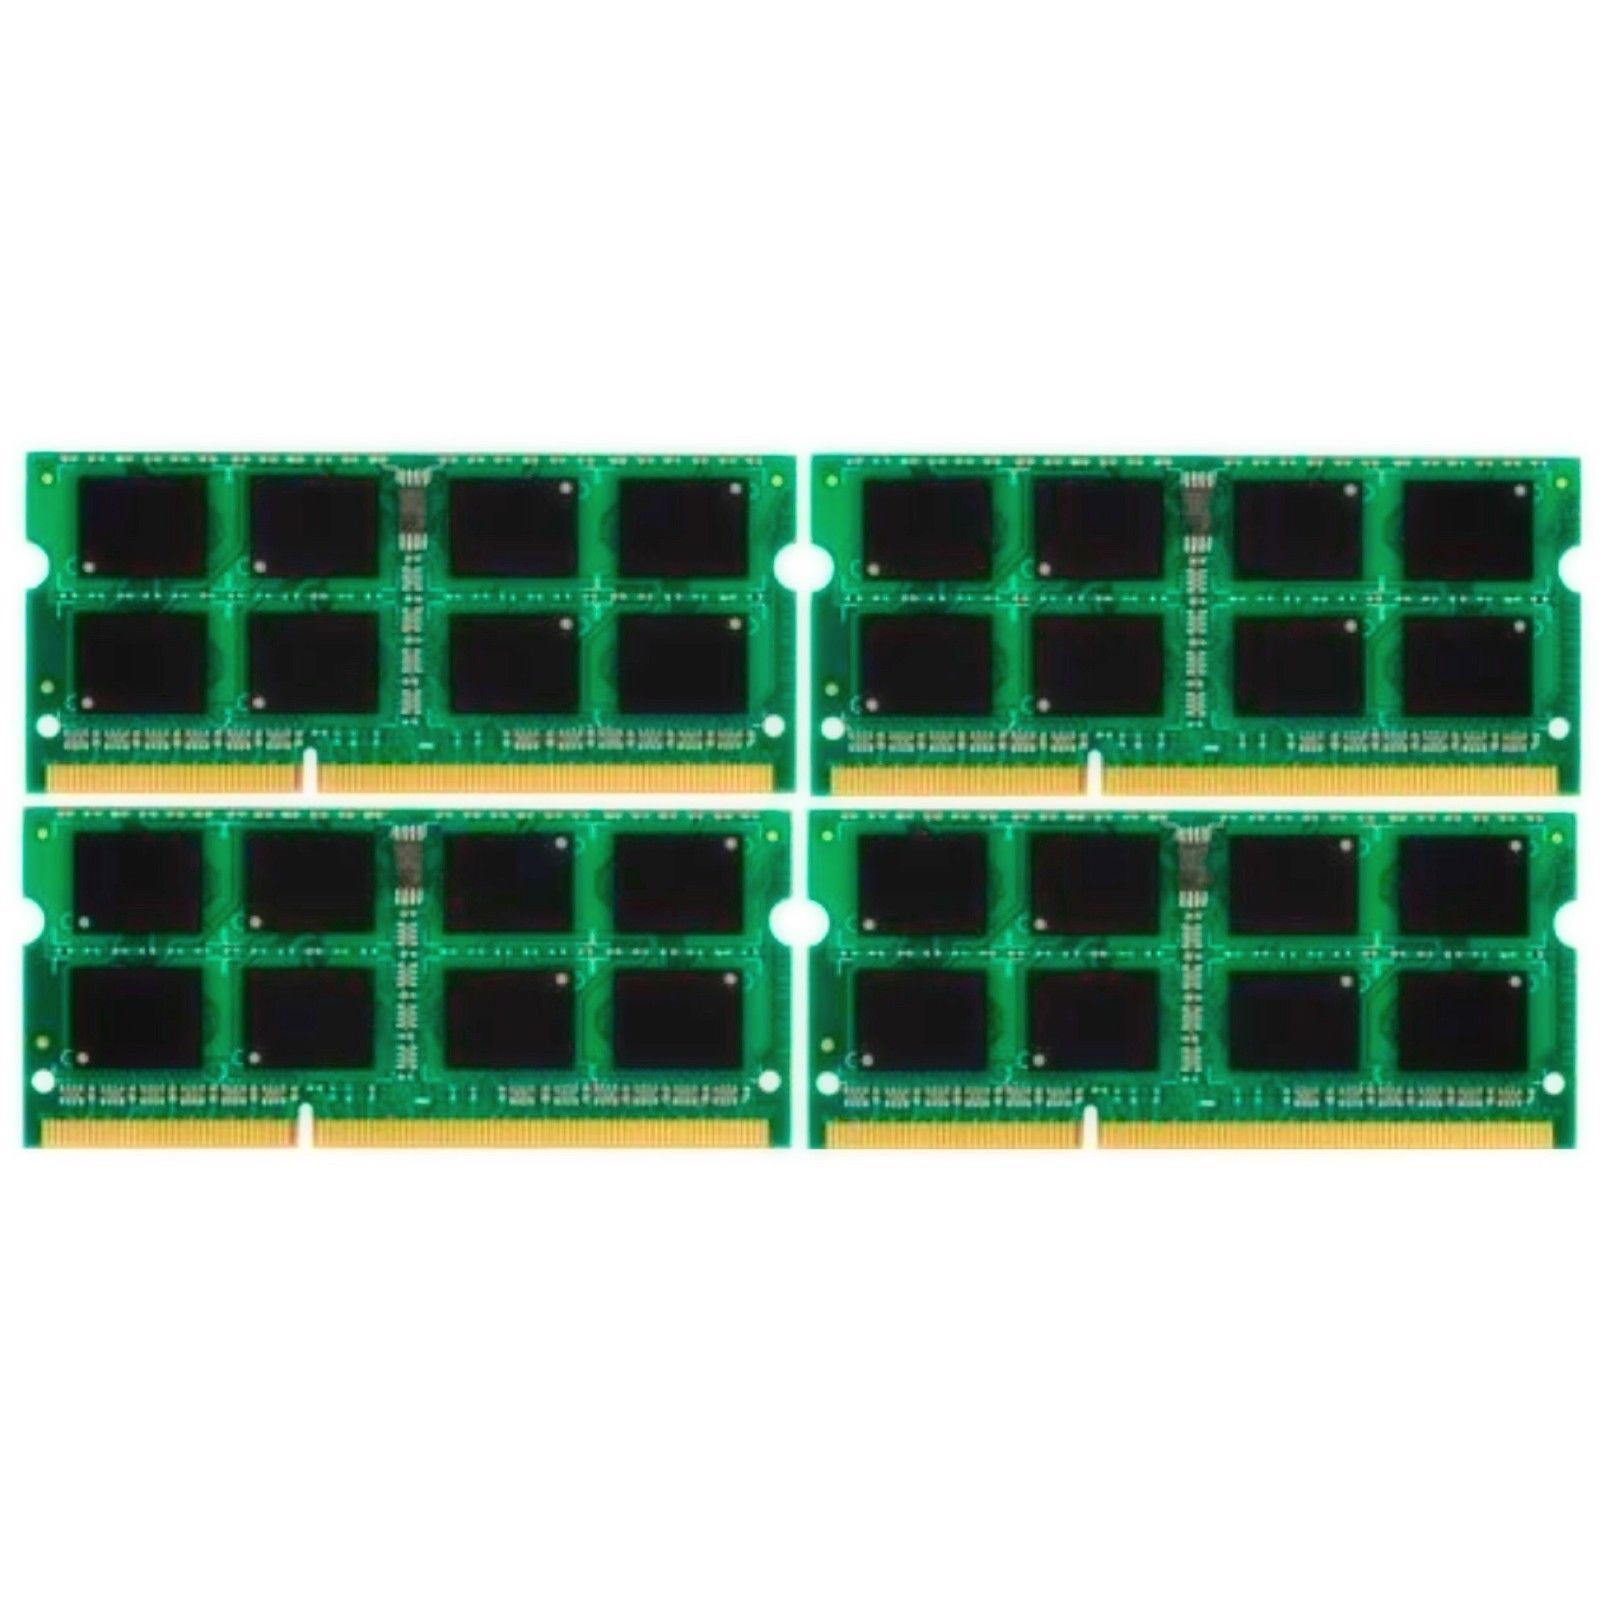 32GB (4x8GB) PC3-12800 DDR3-1600 SODIMM Memory for HP EliteBook 8570w Quad Core